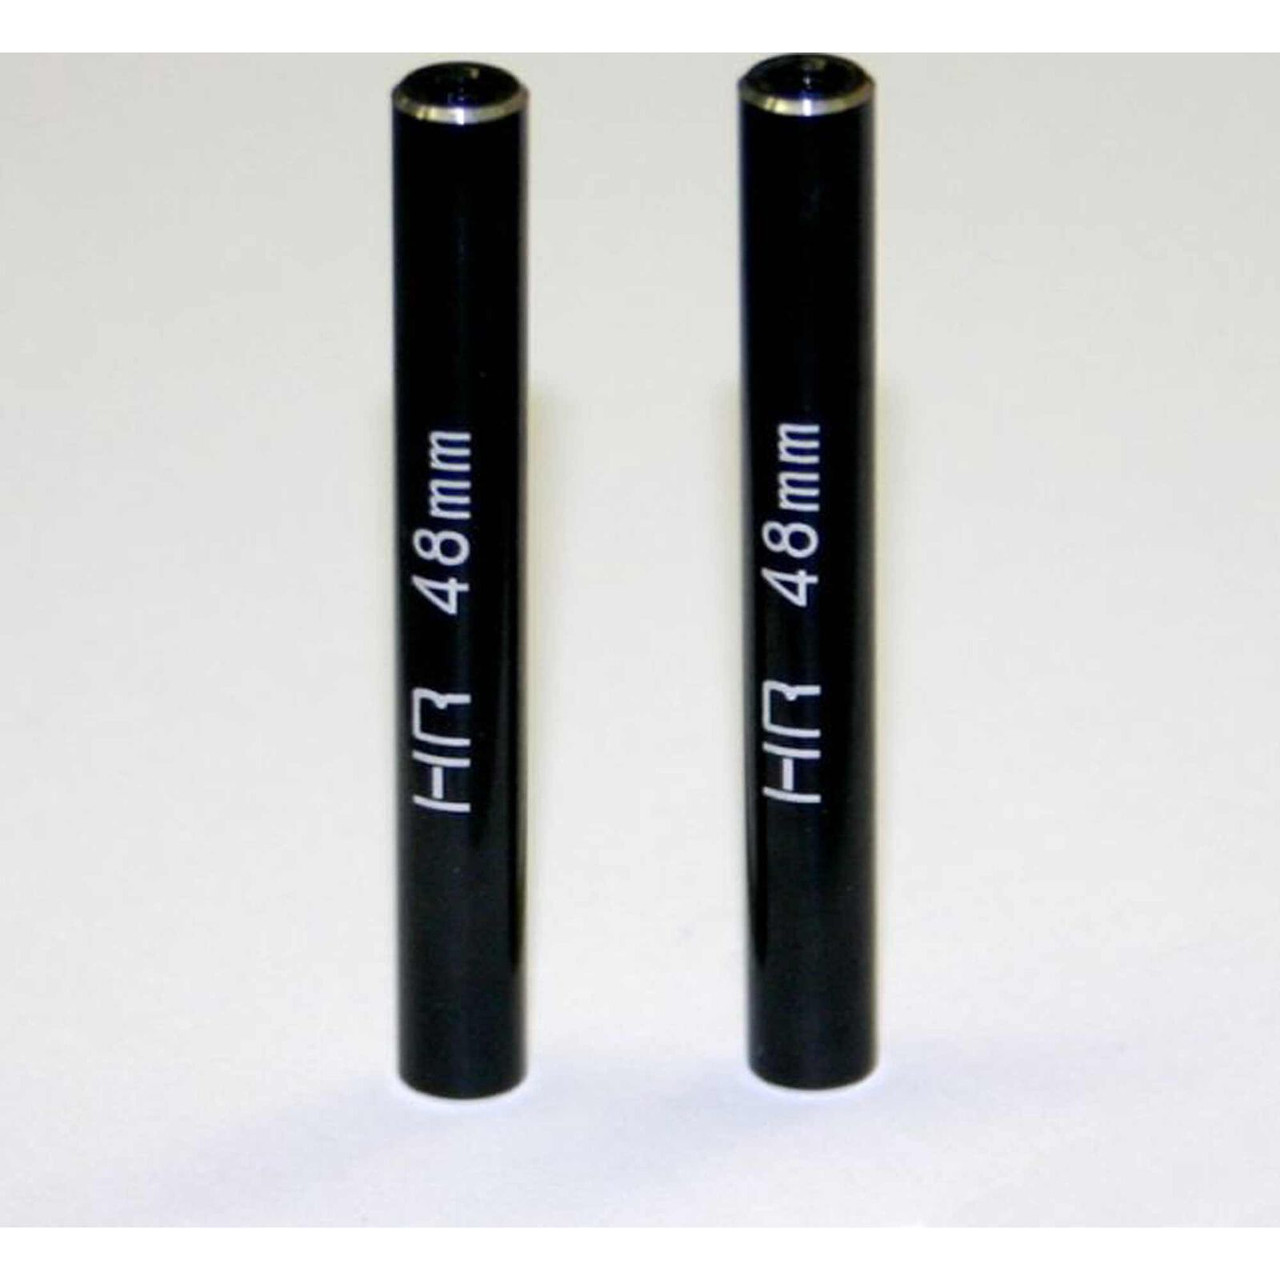 Hot Racing Aluminum Standoff Post Link 6x48mm w/ M3 Threads, Black, 2pcs